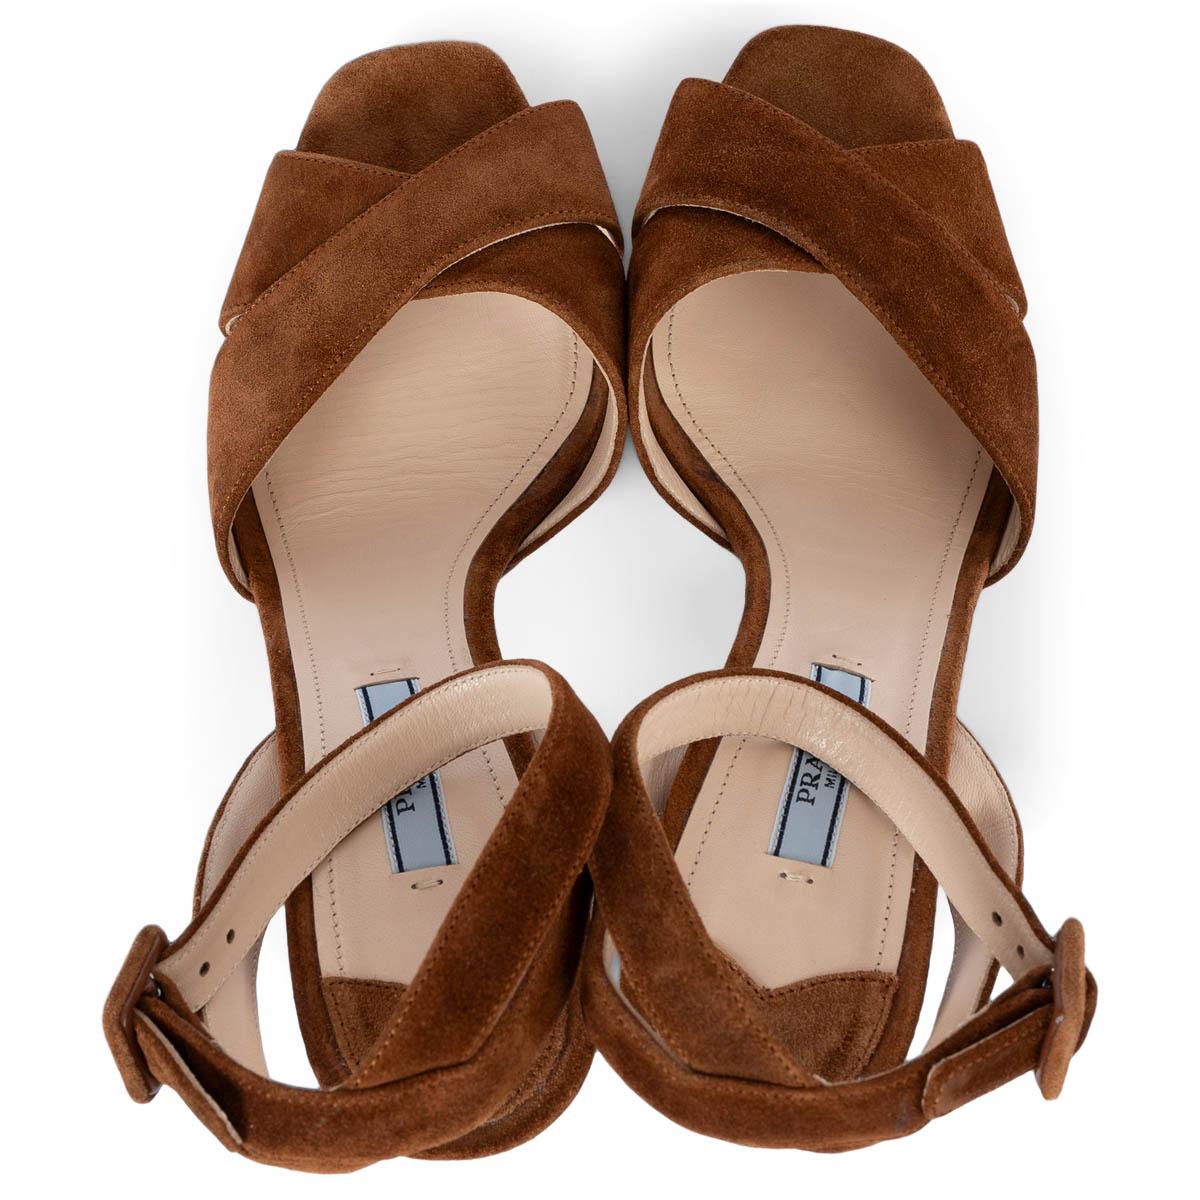 PRADA brown suede Platform Ankle Strap Sandals Shoes 40 For Sale 1